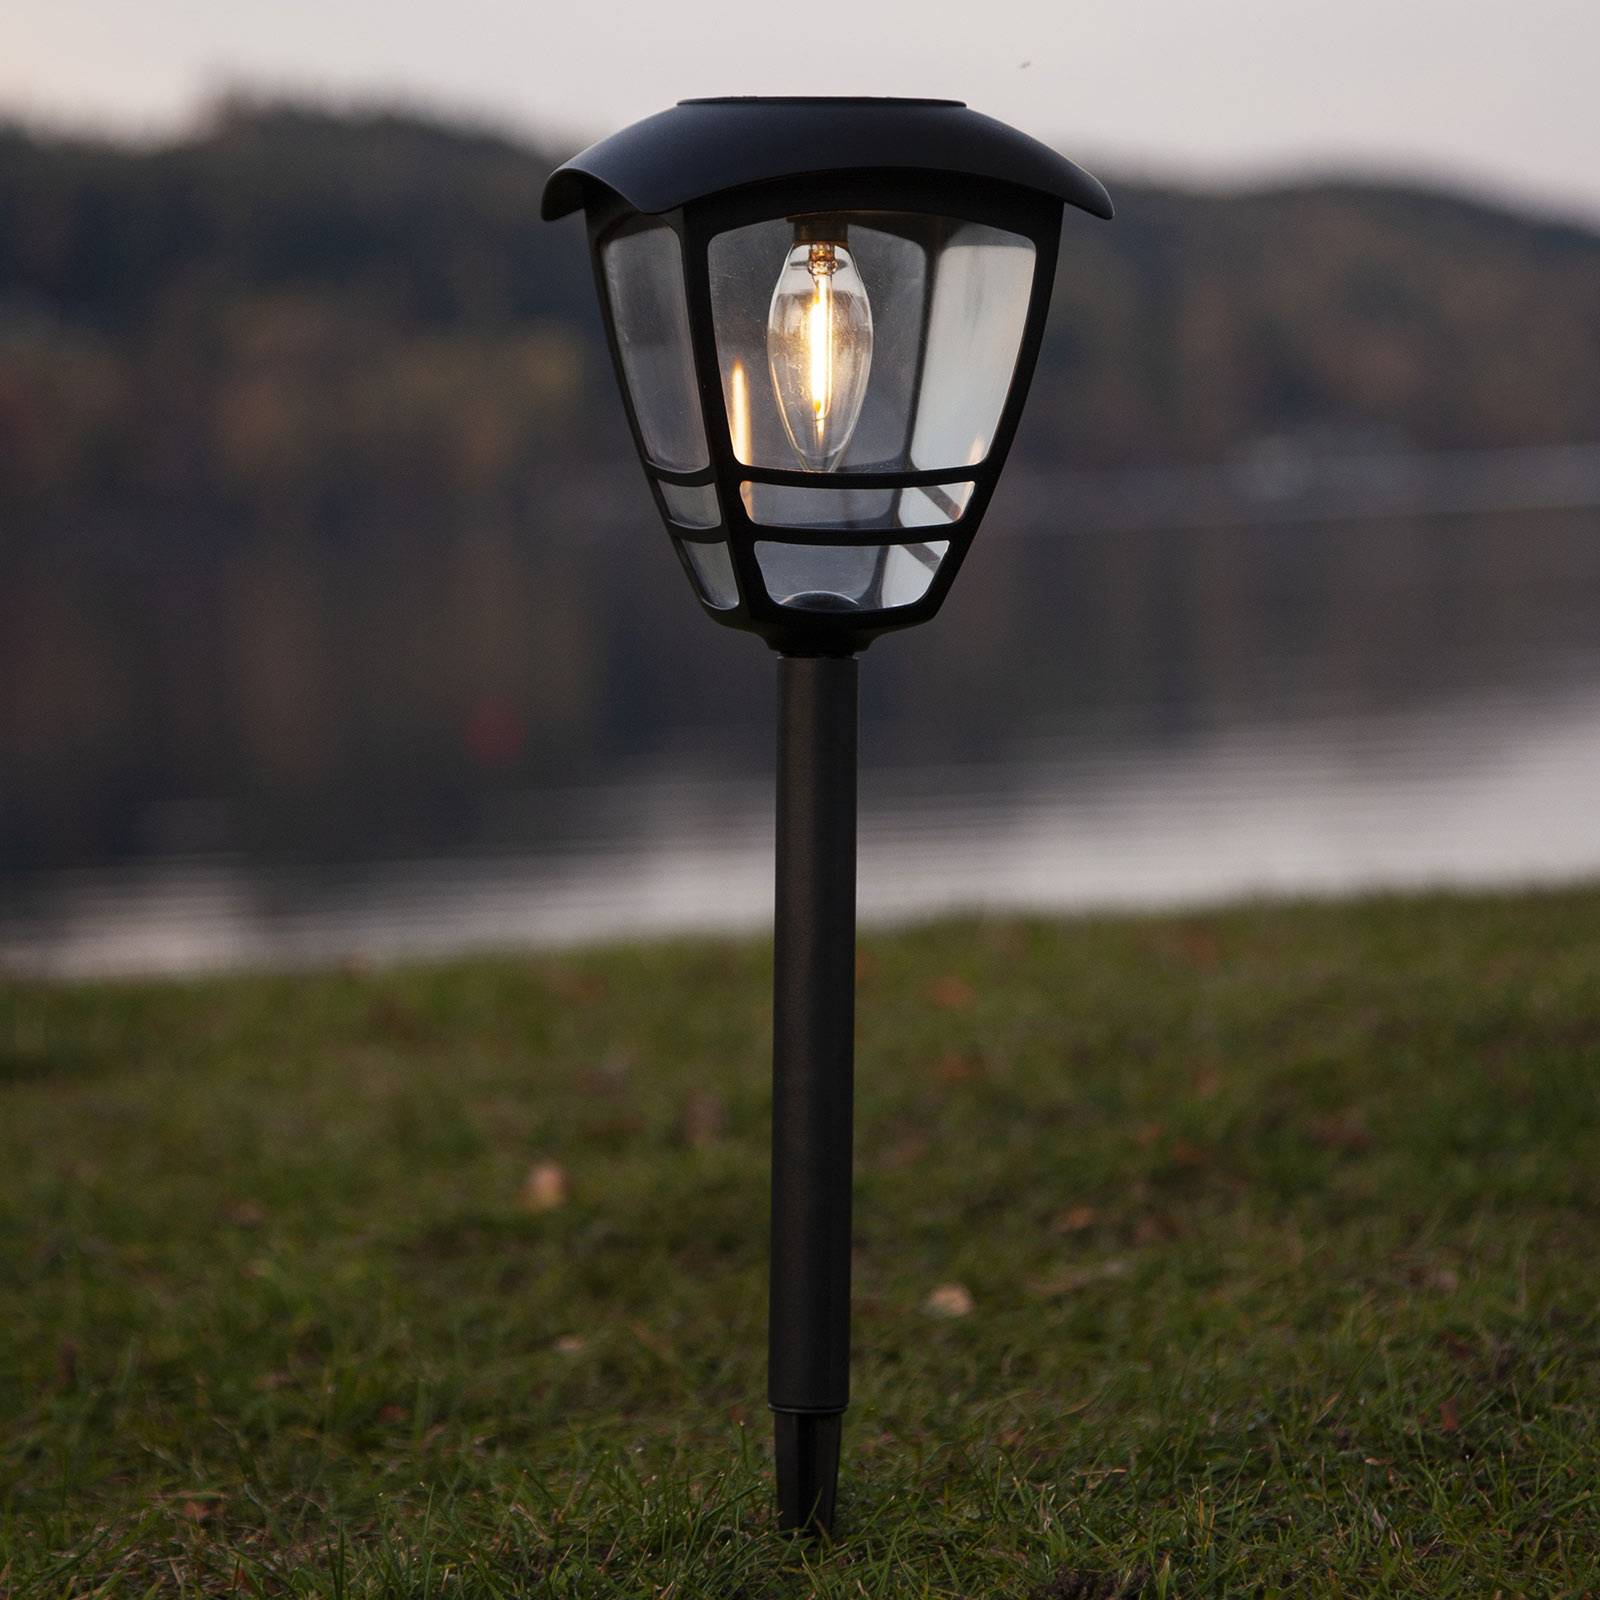 LED lamp op zonne-energie | Lampen24.nl